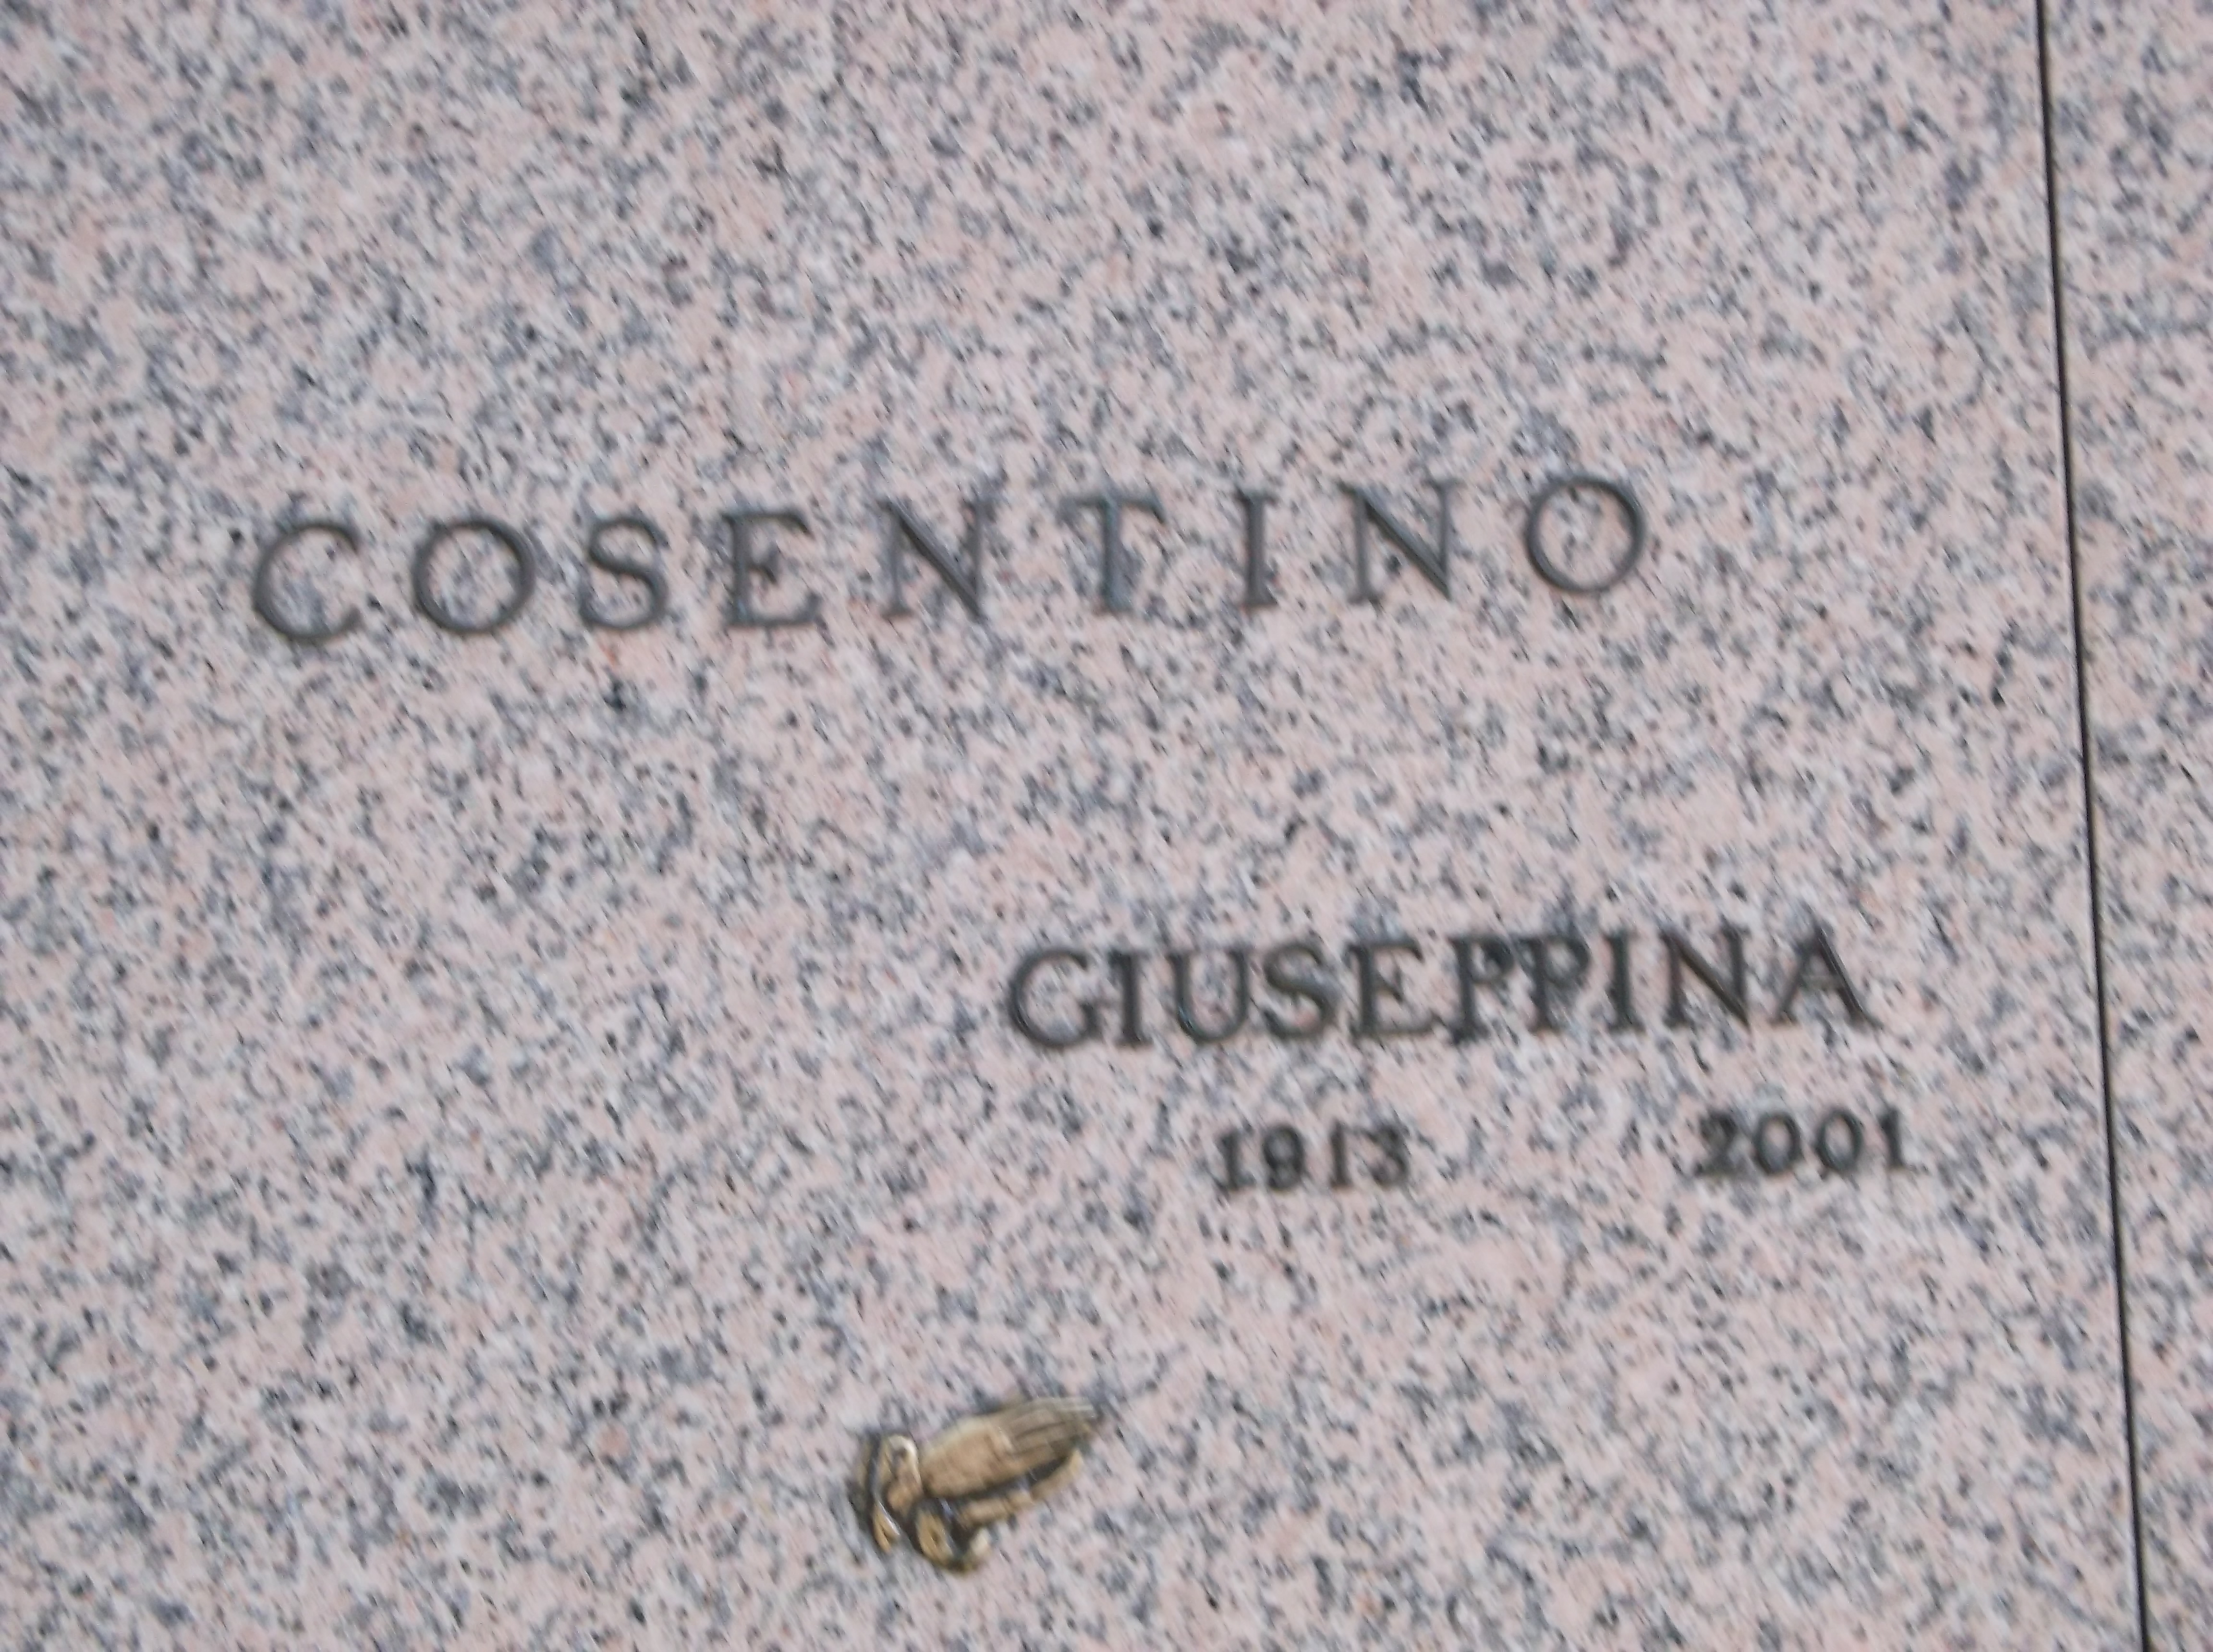 Giuseppina Cosentino